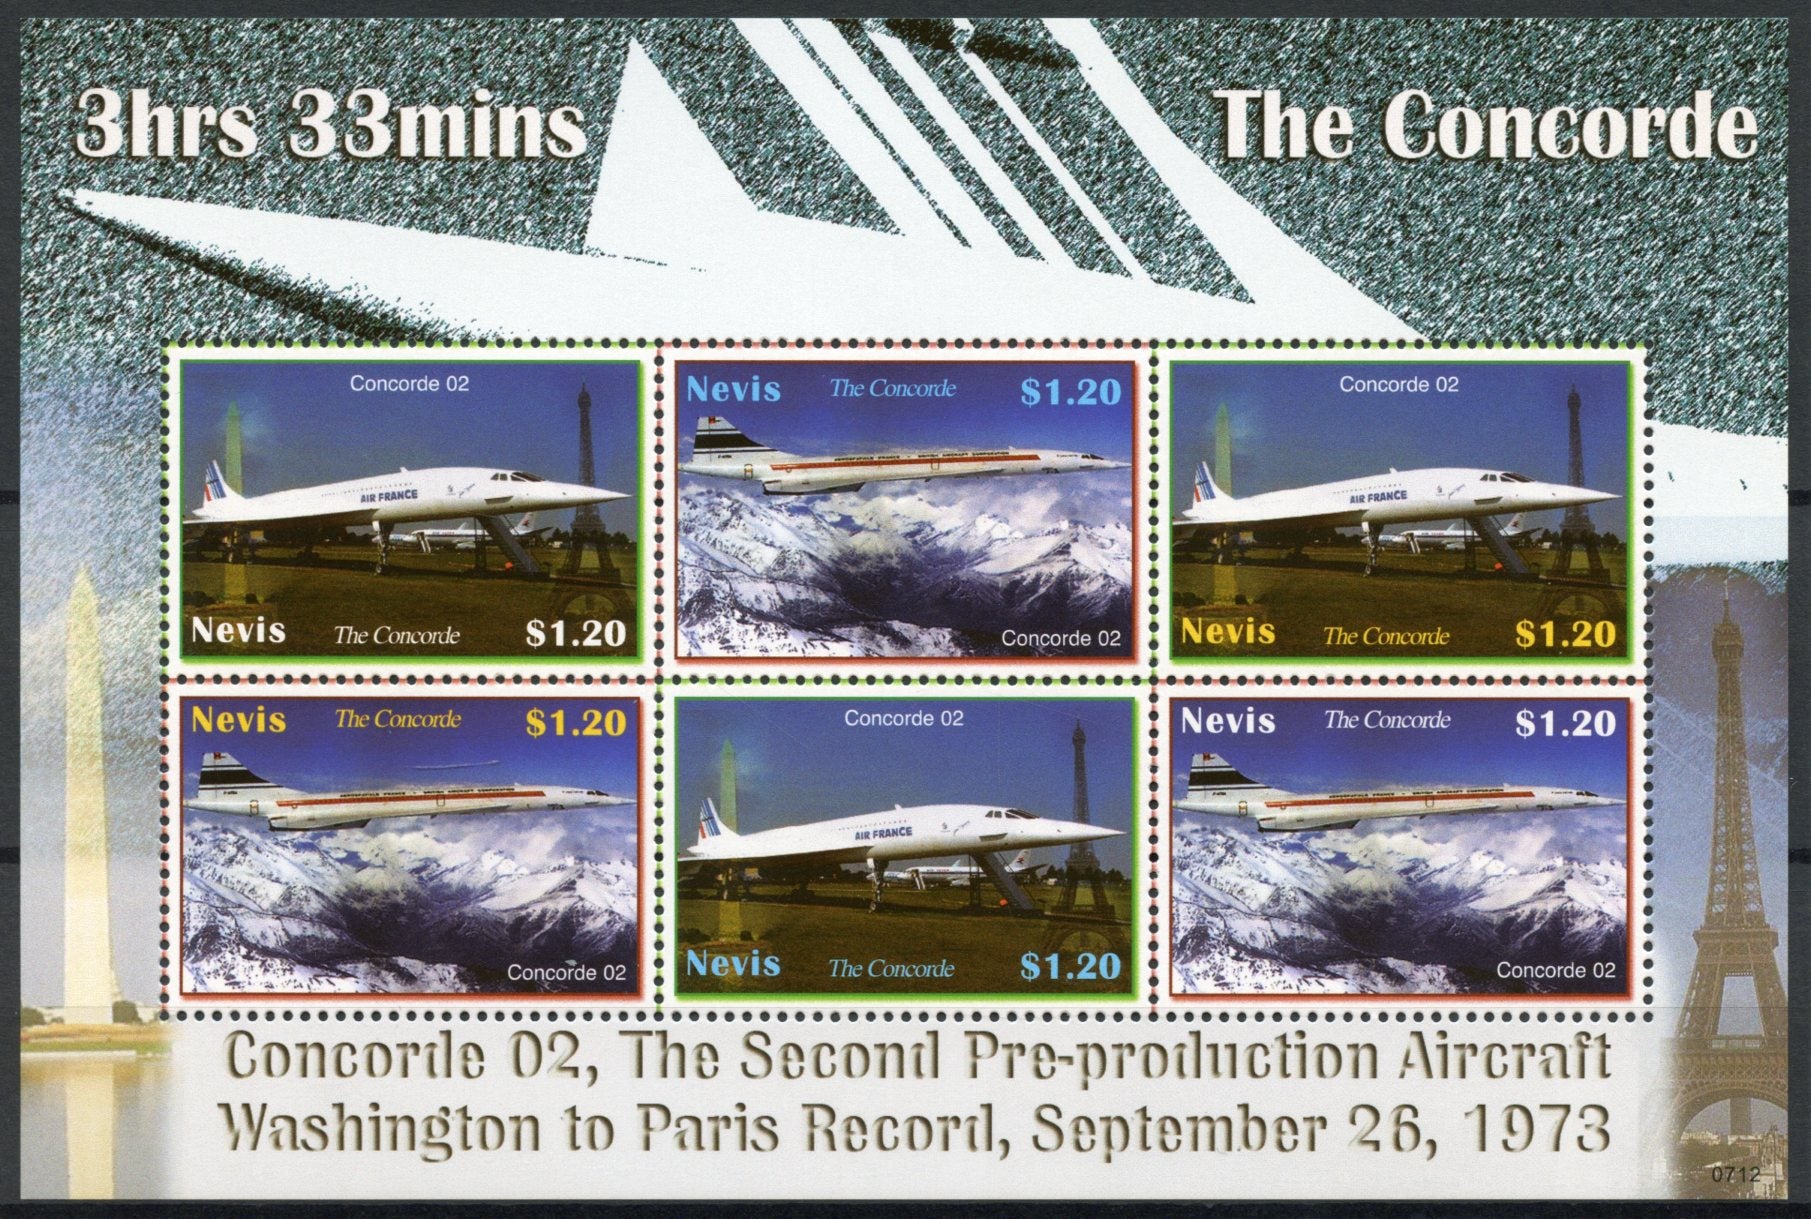 Nevis 2007 MNH Concorde 02 Washington Paris Record 6v M/S Eiffel Tower Stamps